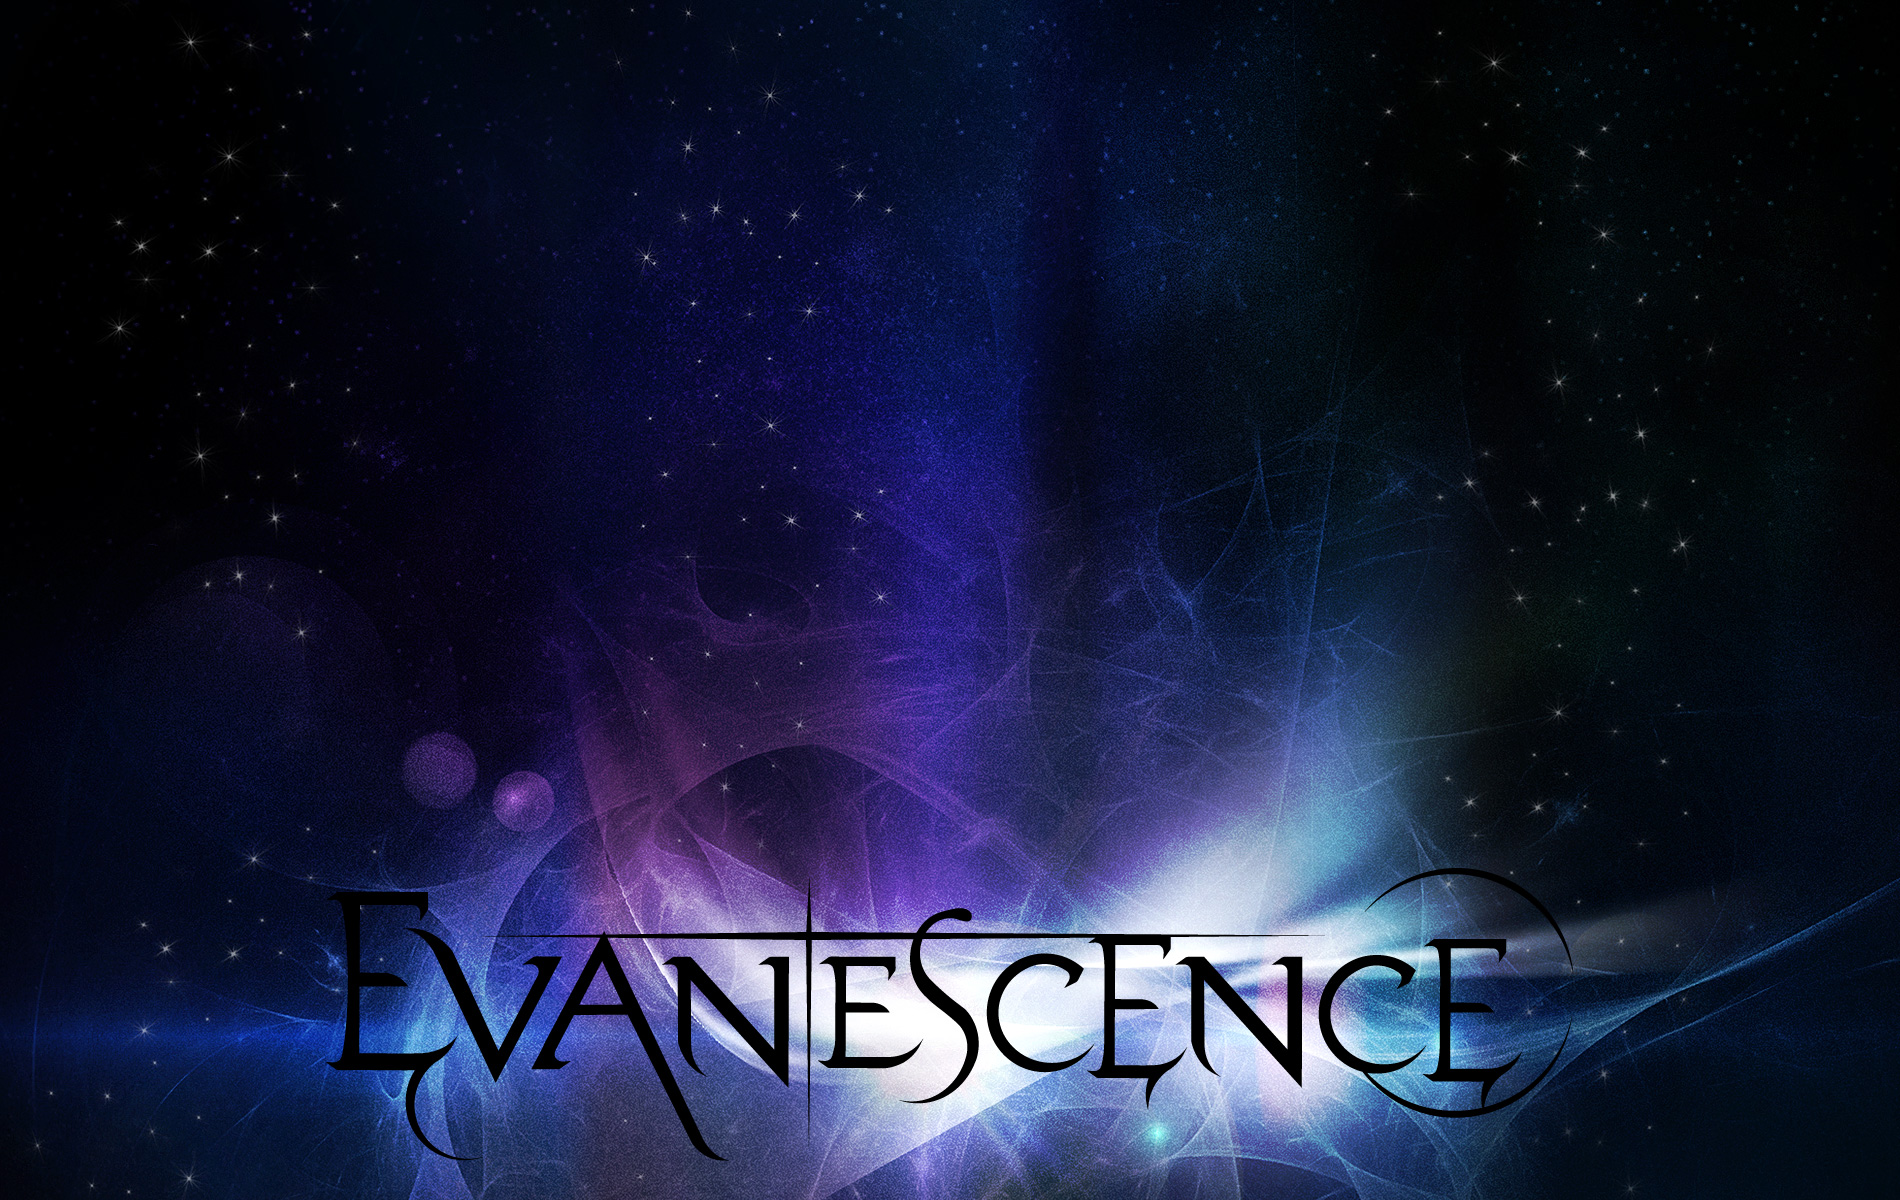 Evanescence Wallpaper Photo